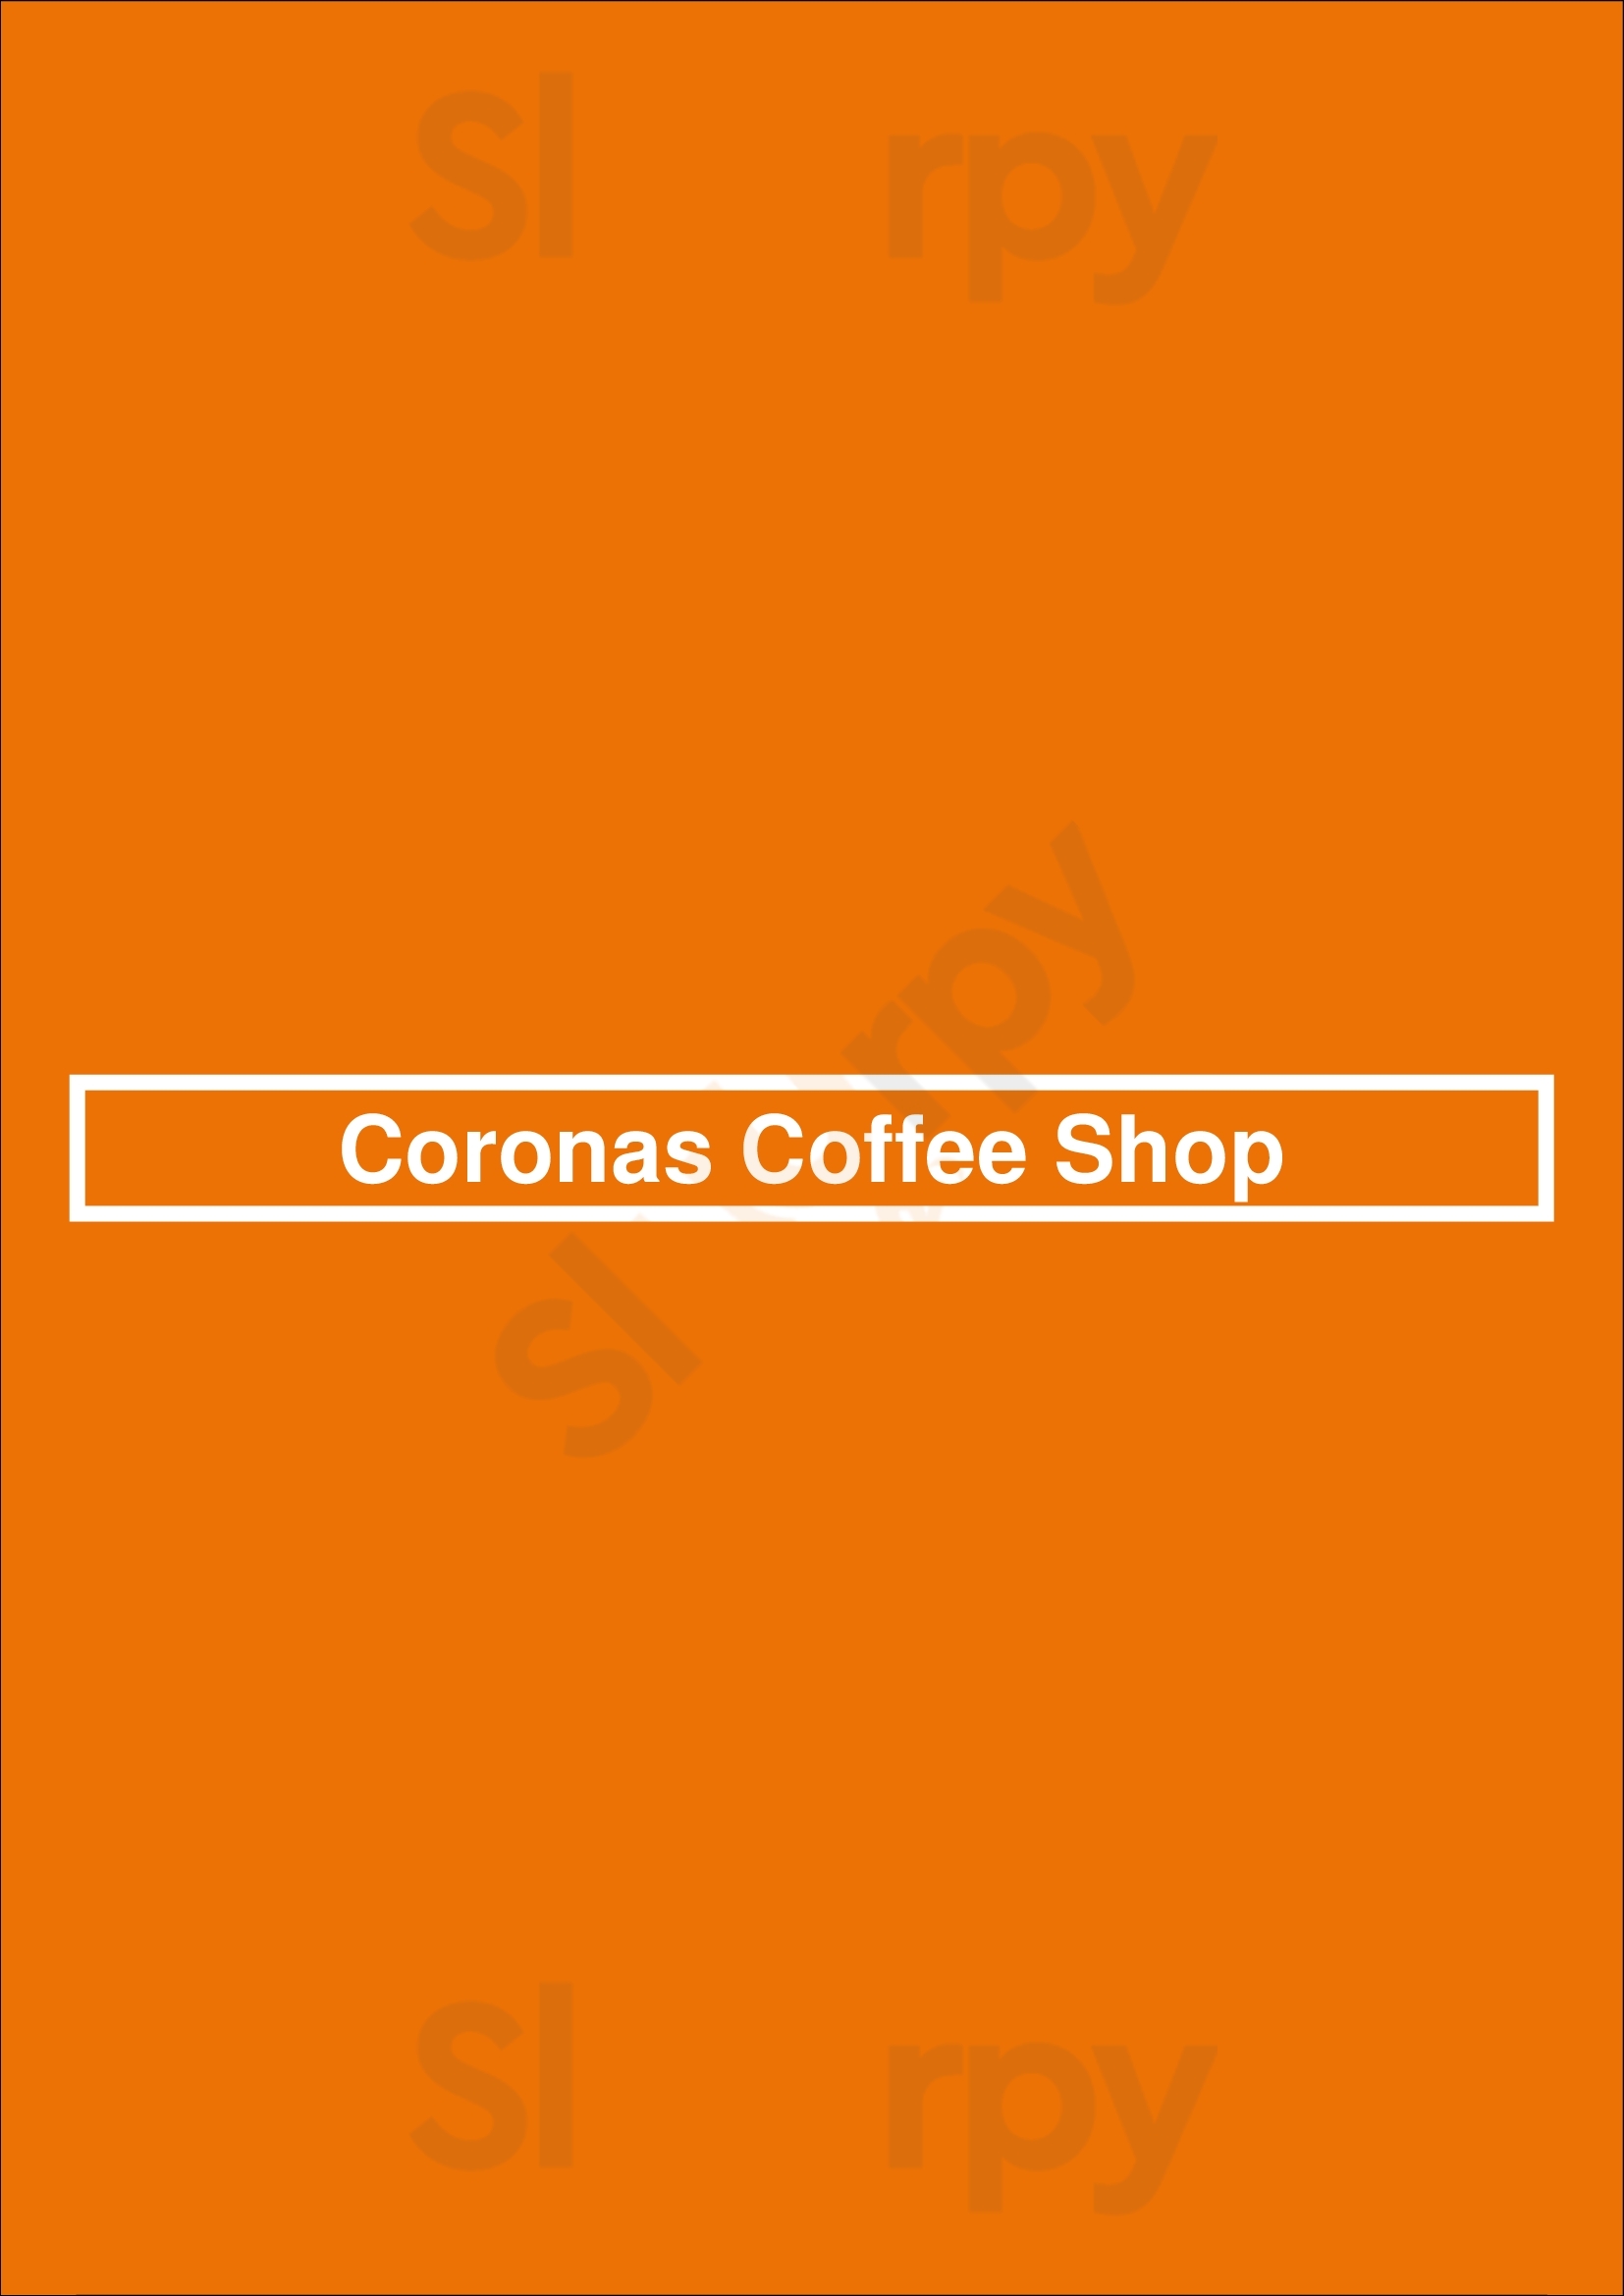 Coronas Coffee Shop Chicago Menu - 1